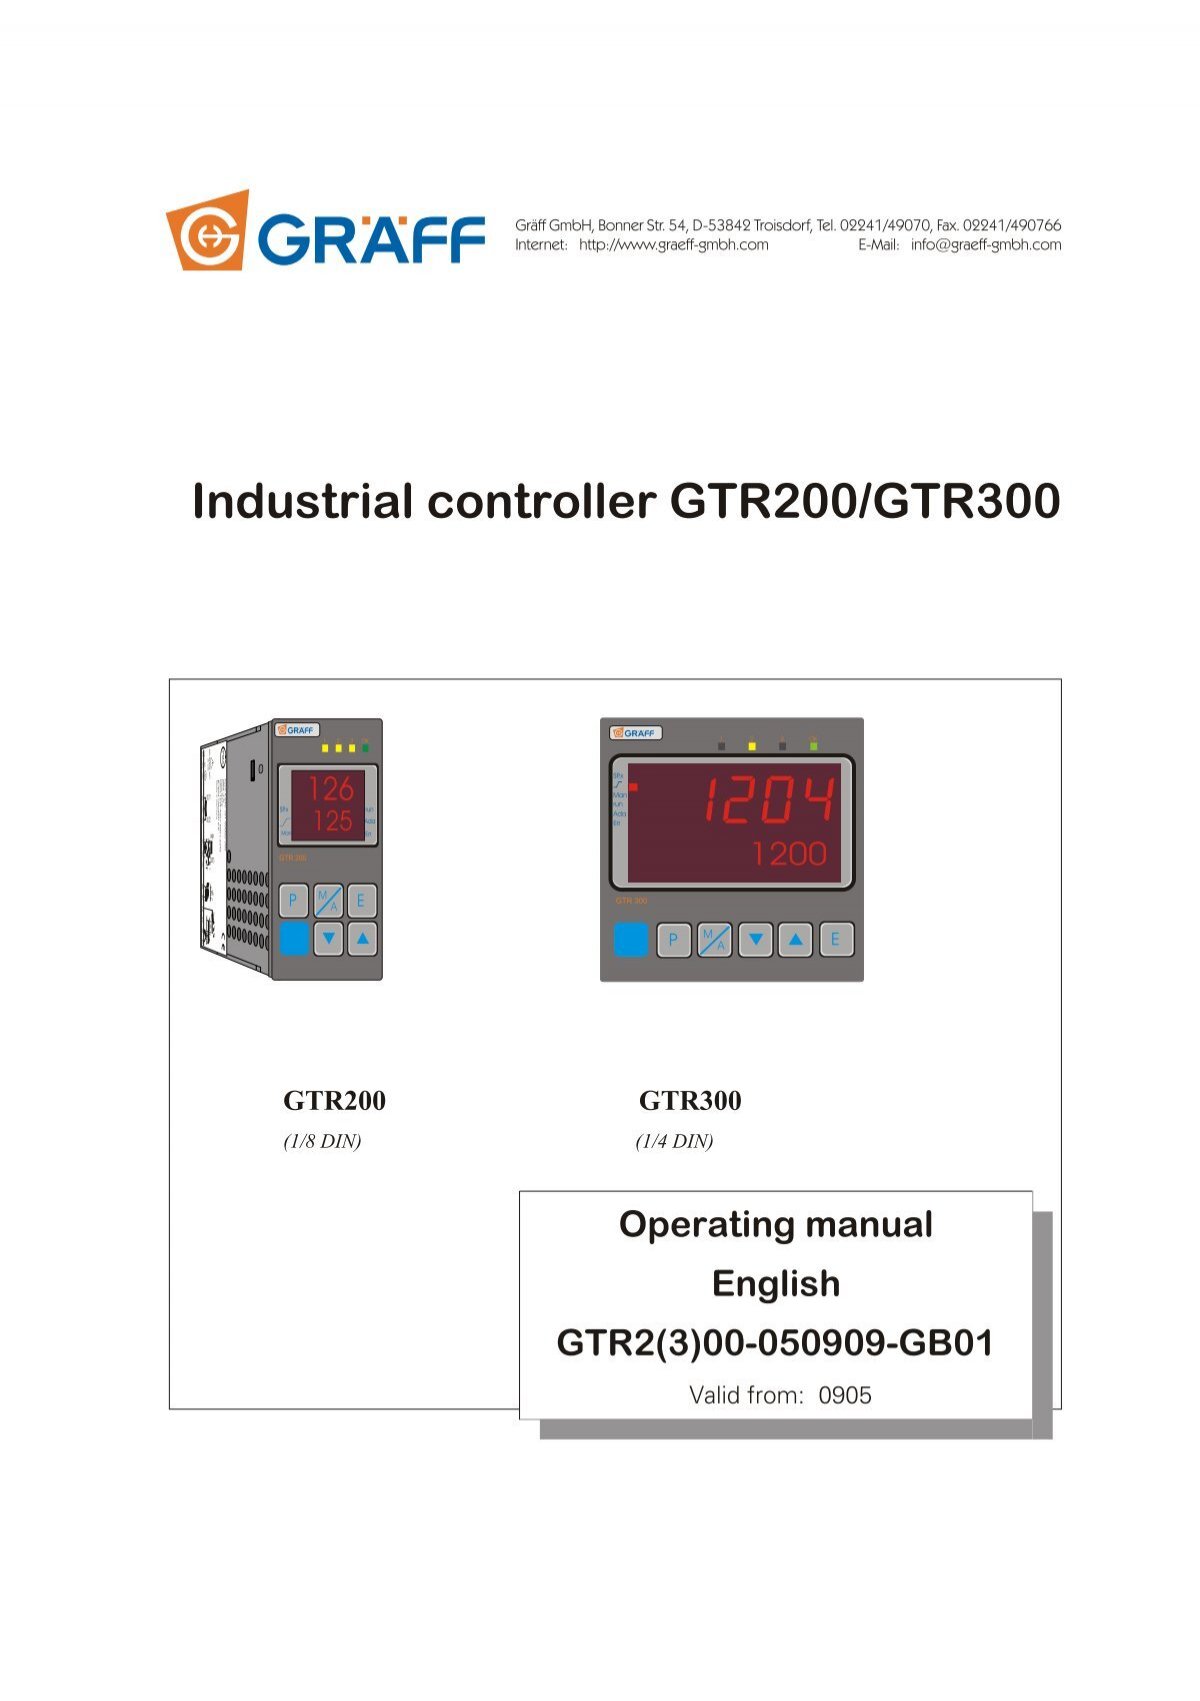 Industrial controller GTR200/GTR300 - Temperature, Measurement